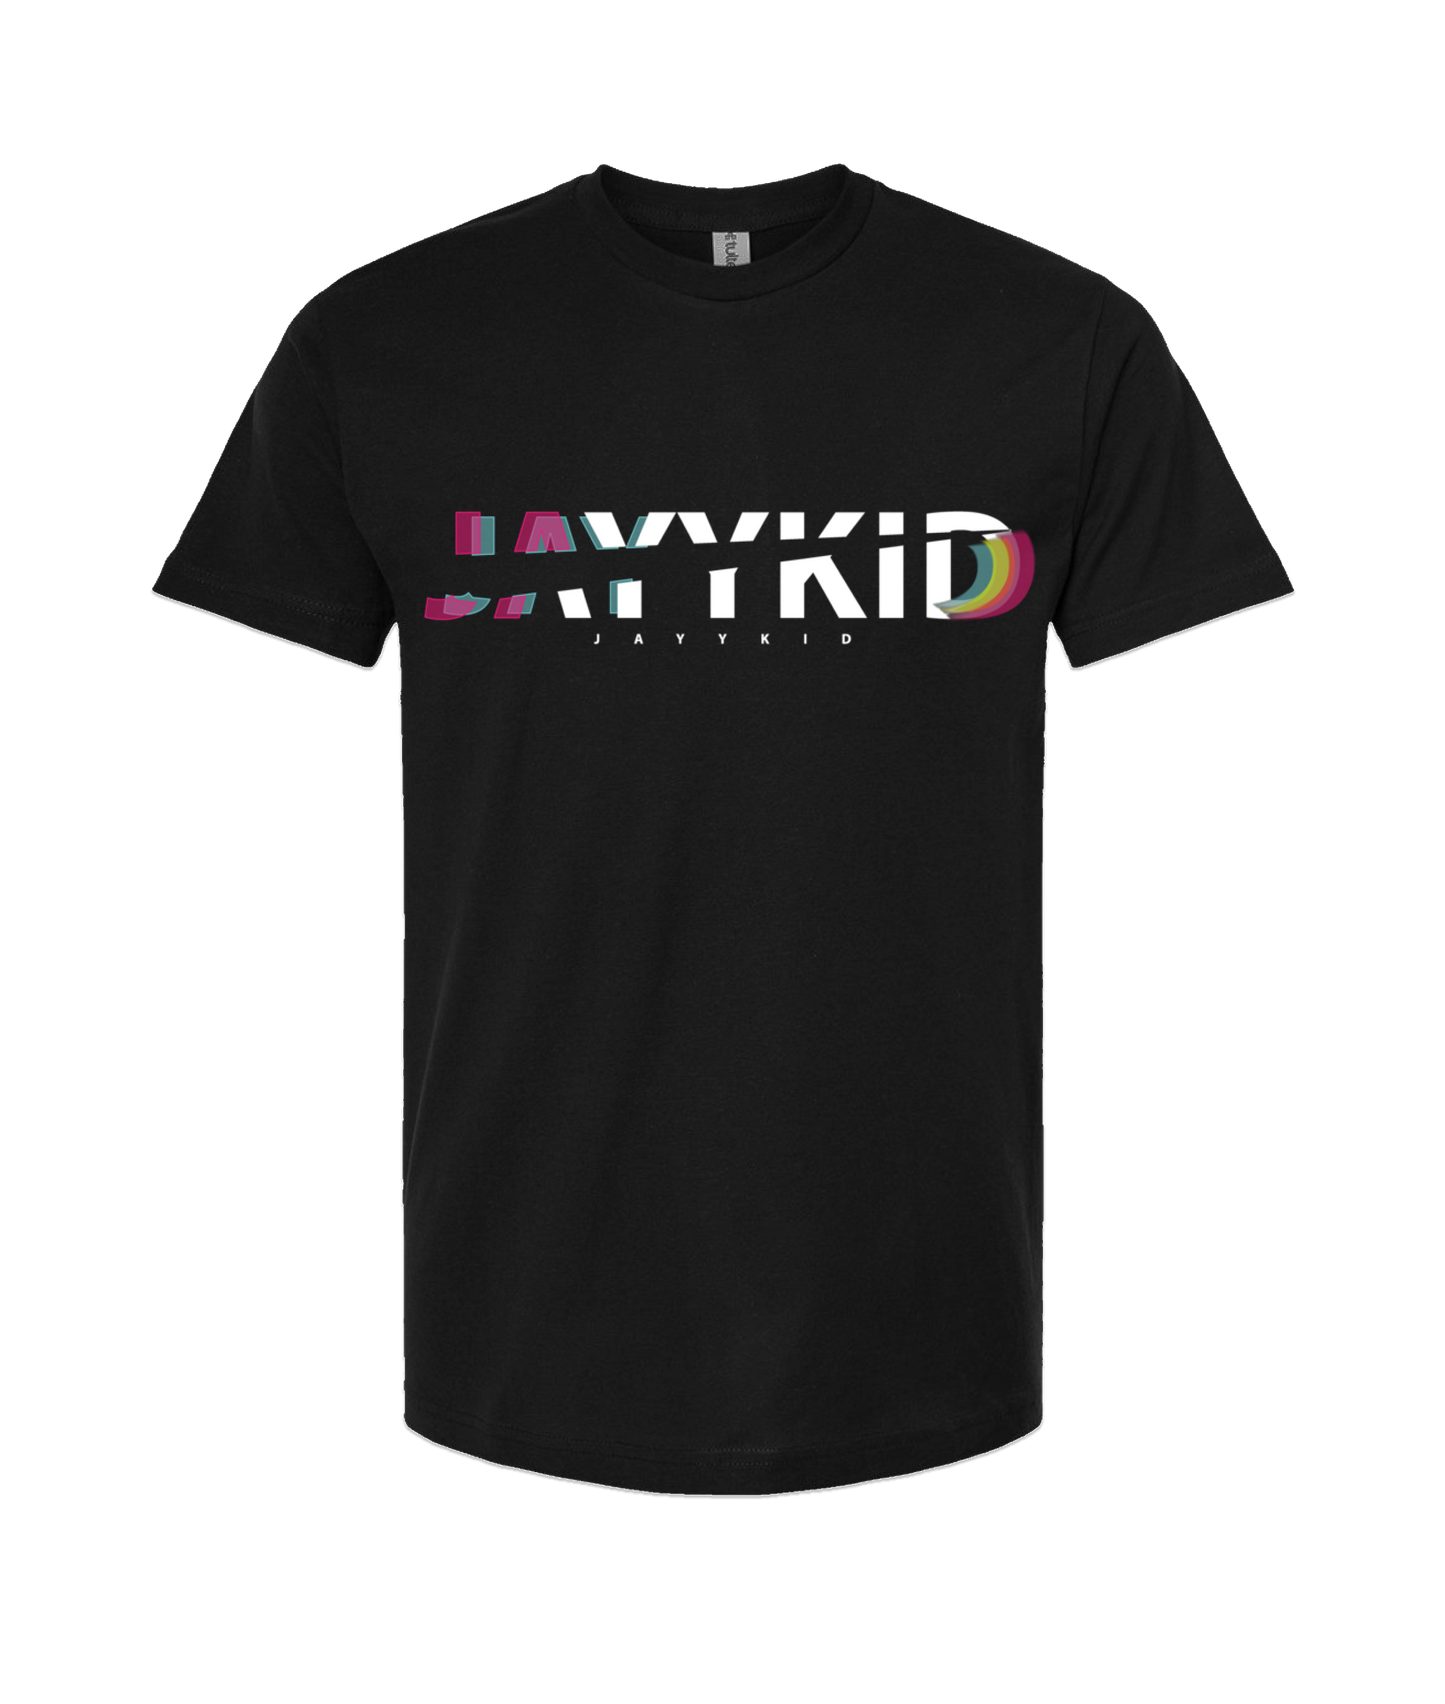 Jayy Kid - LOGO 3 - Black T-Shirt